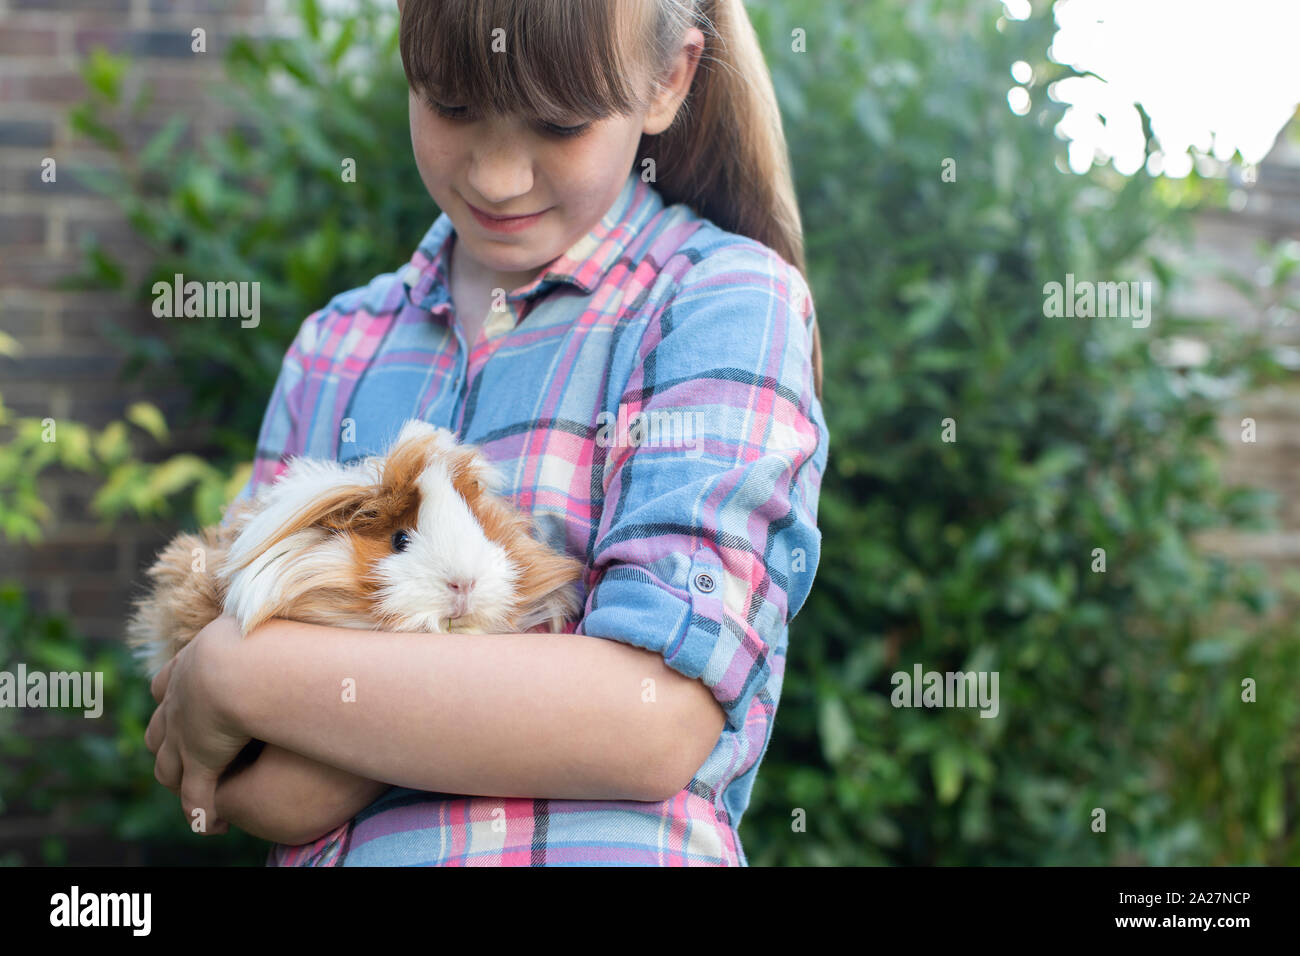 Girl Holding Pet Guinea Pig Outdoors In Garden Stock Photo